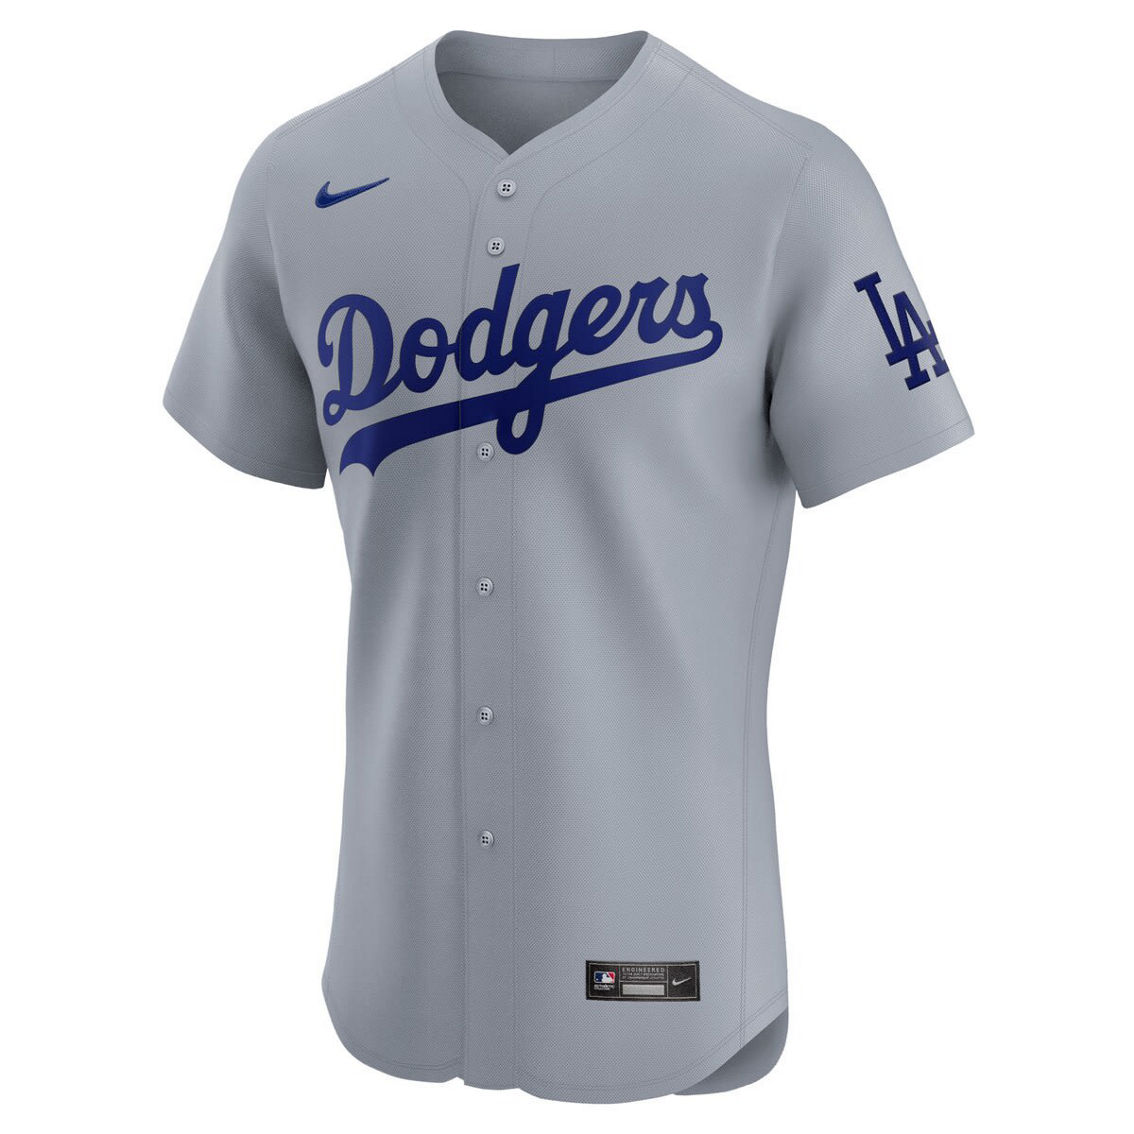 Nike Men's Gray Los Angeles Dodgers Alternate Vapor Premier Elite Patch Jersey - Image 3 of 4